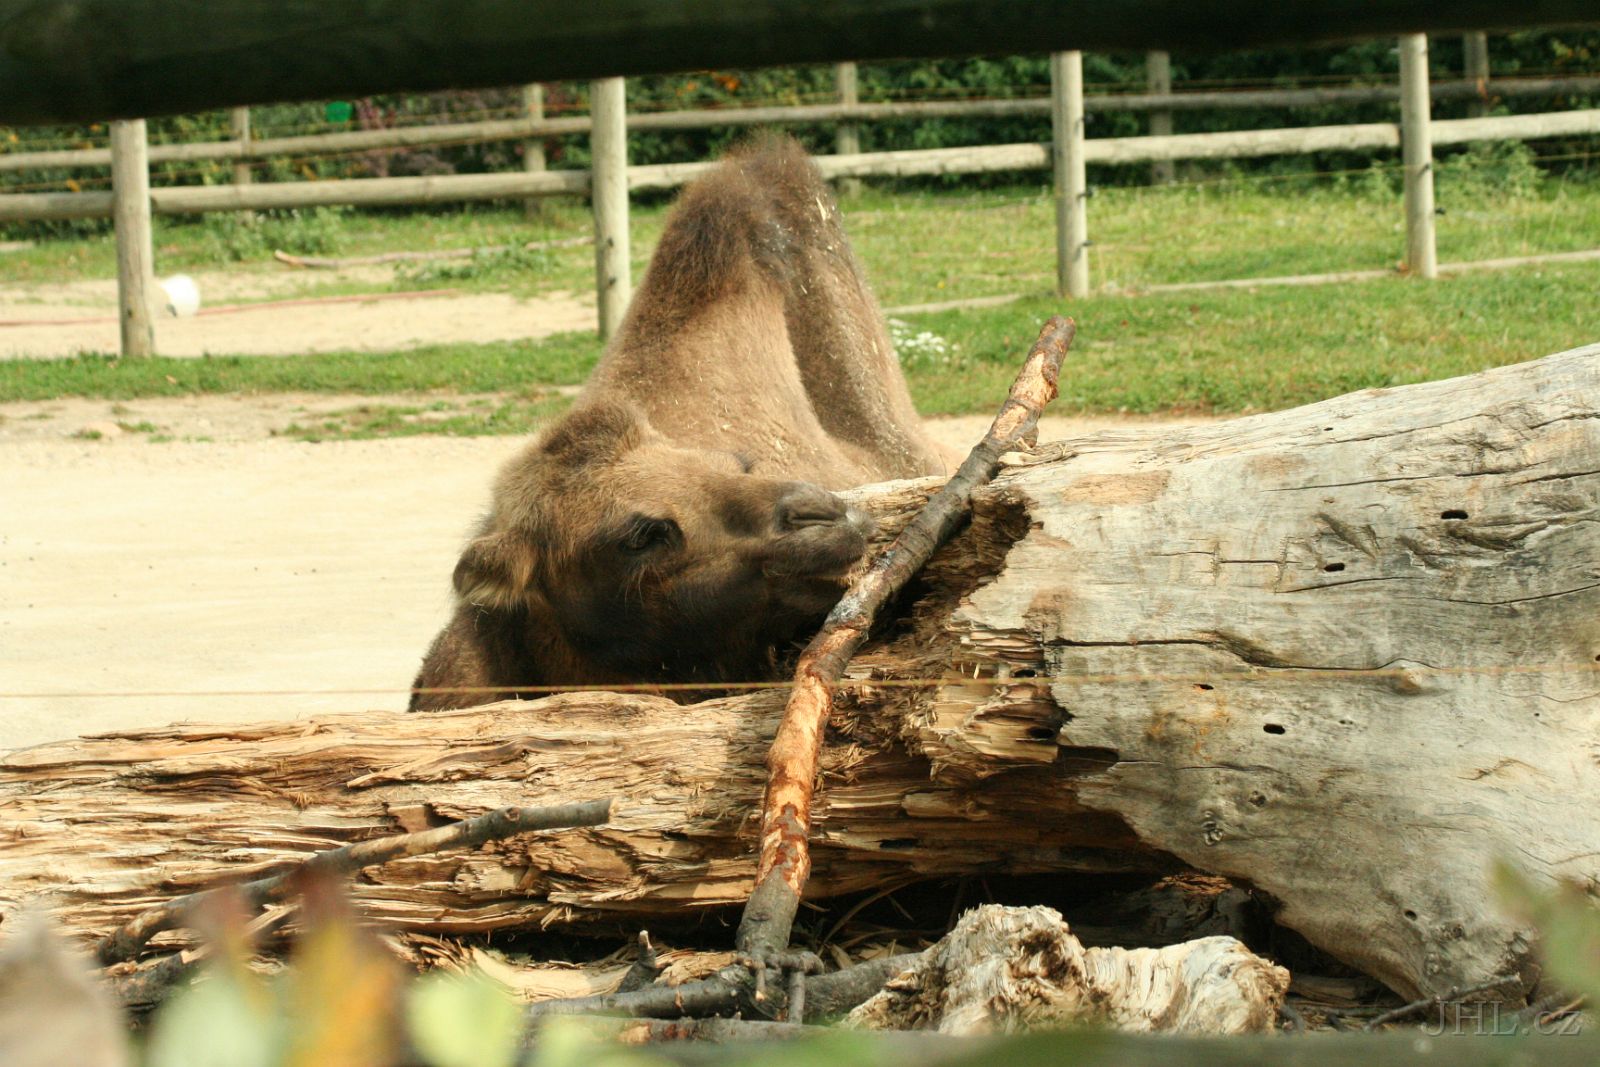 060917c627.JPG - Velbloud dvouhrbý (Camelus ferus f. bactrianus)